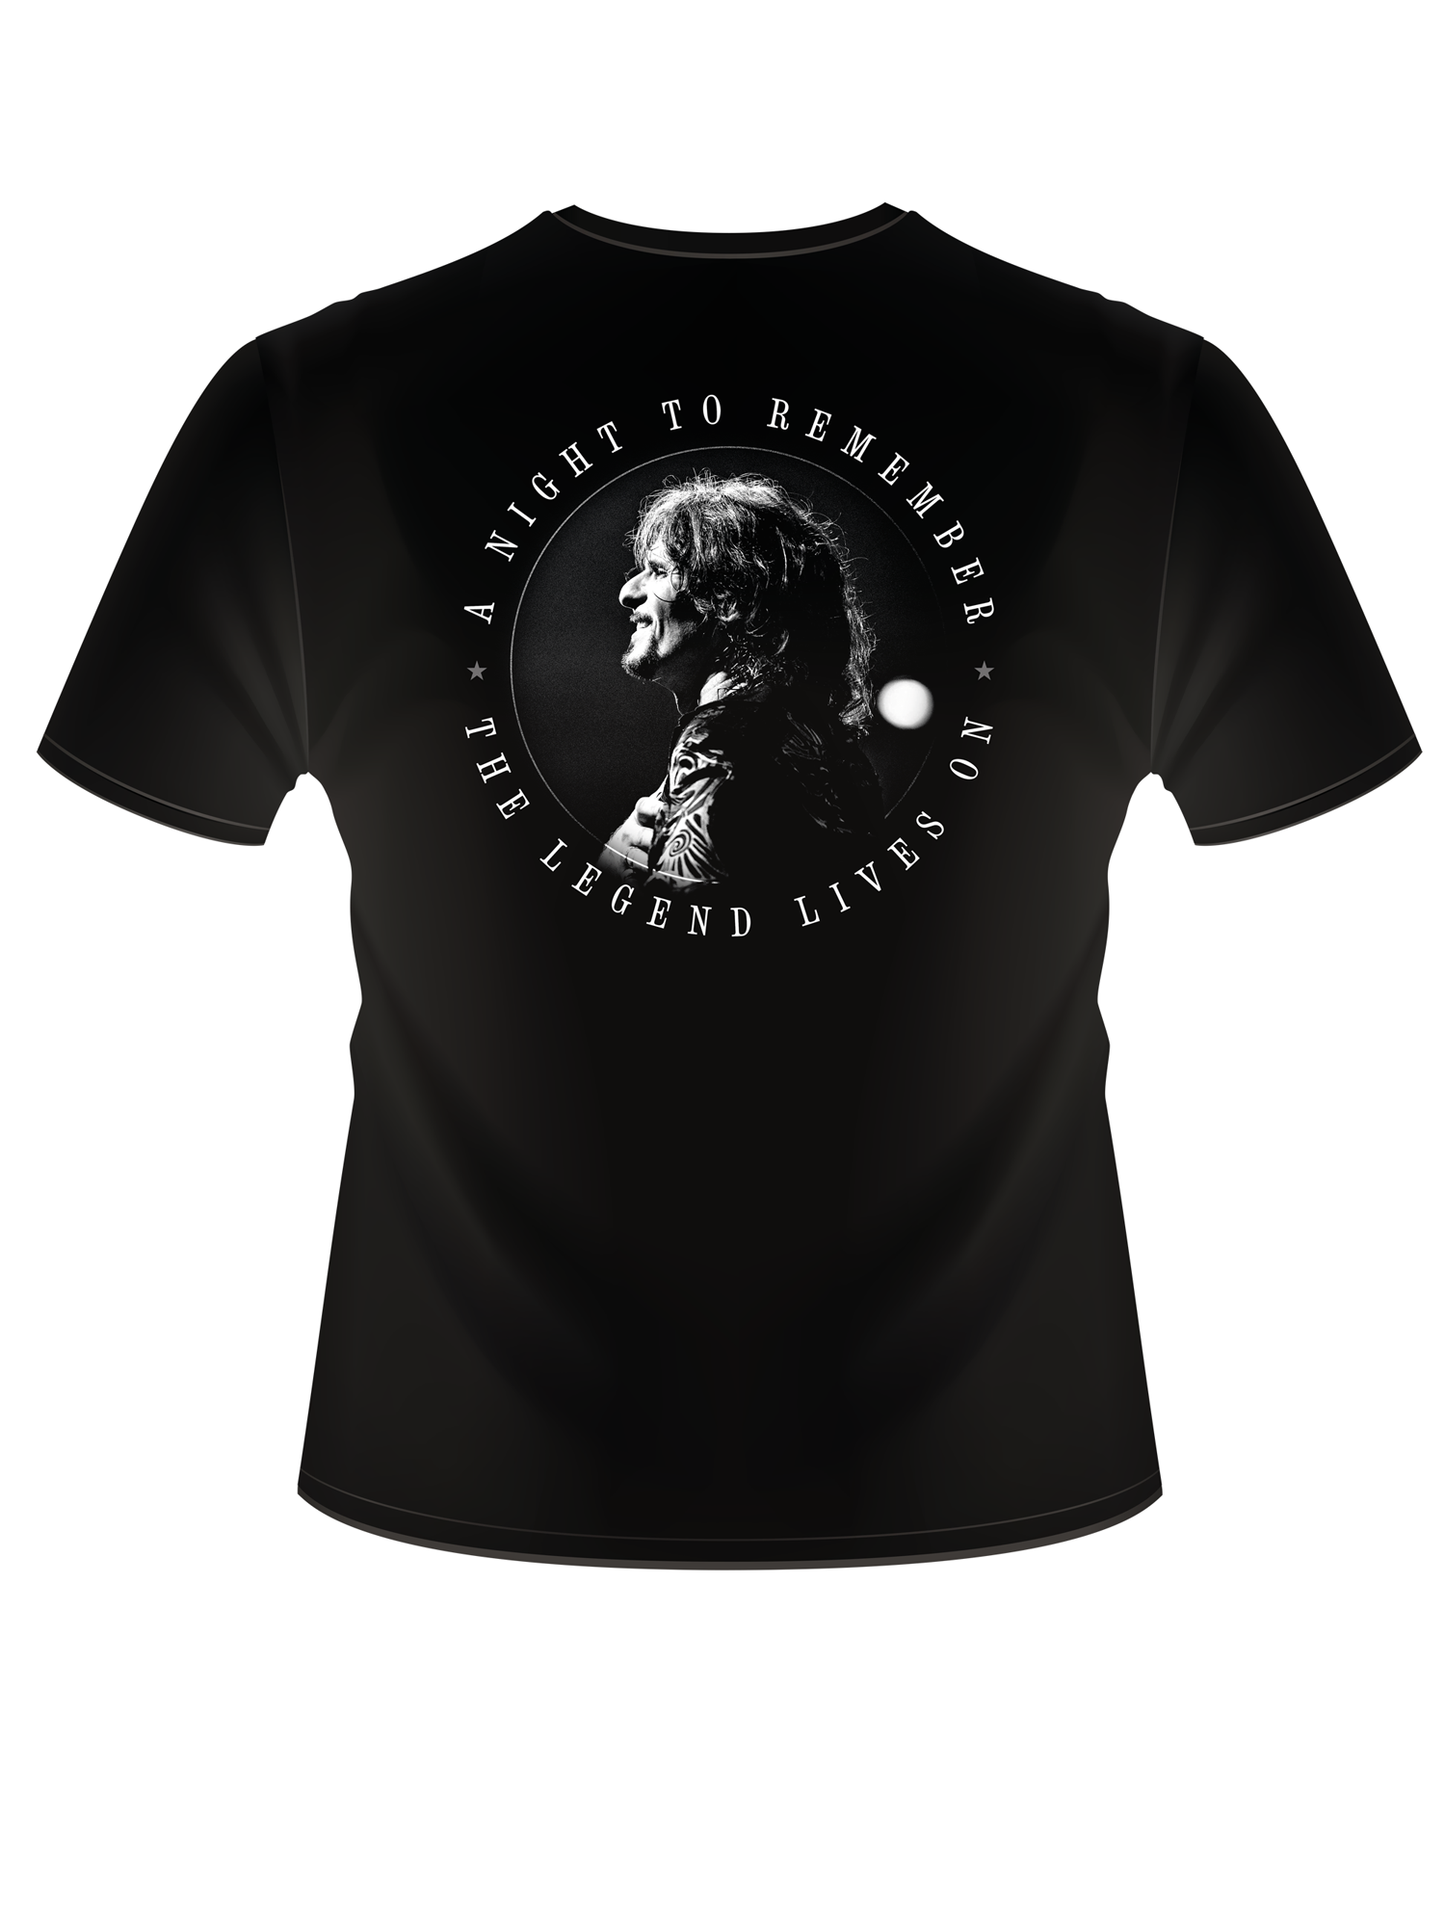 Steve Lee Tribute - T-Shirt